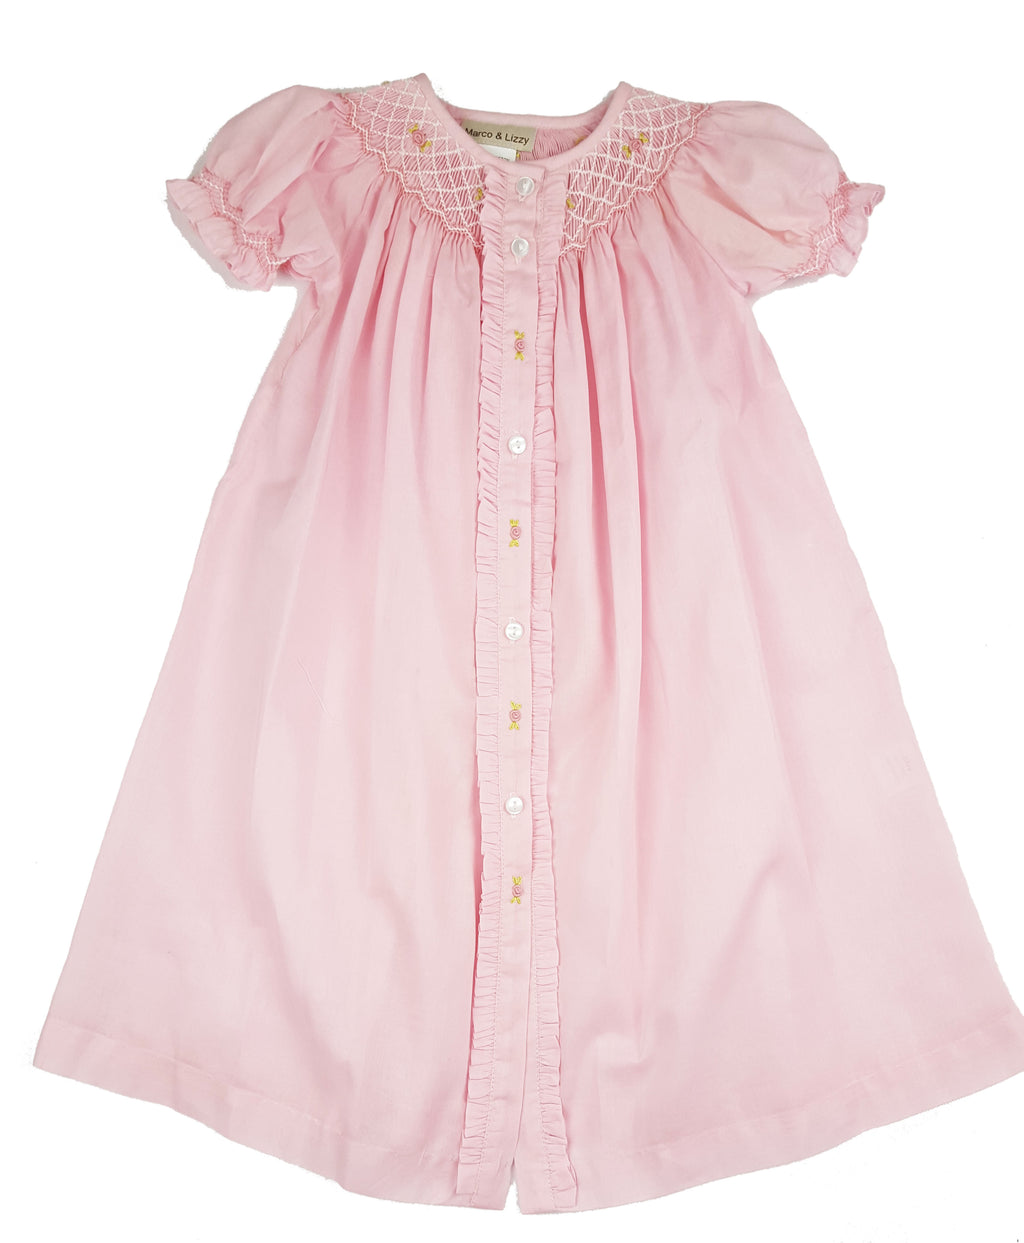 Baby Girl's Bubblegum Pink Dress - Little Threads Inc. Children's Clothing